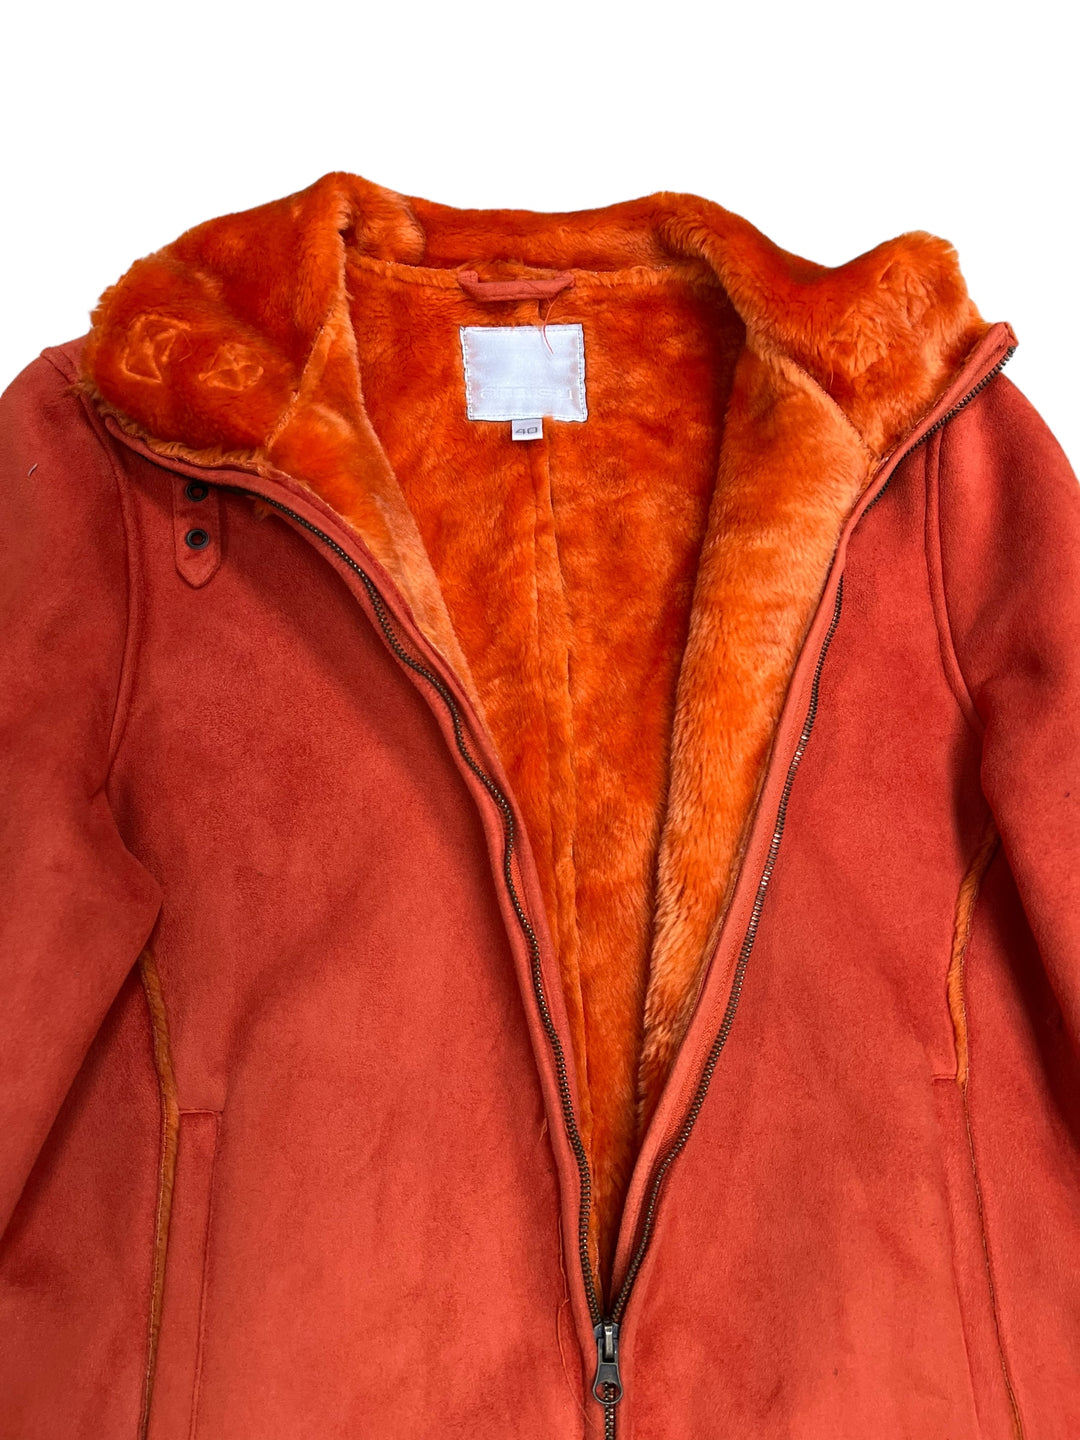 Y2K faux suede orange jacket women’s medium